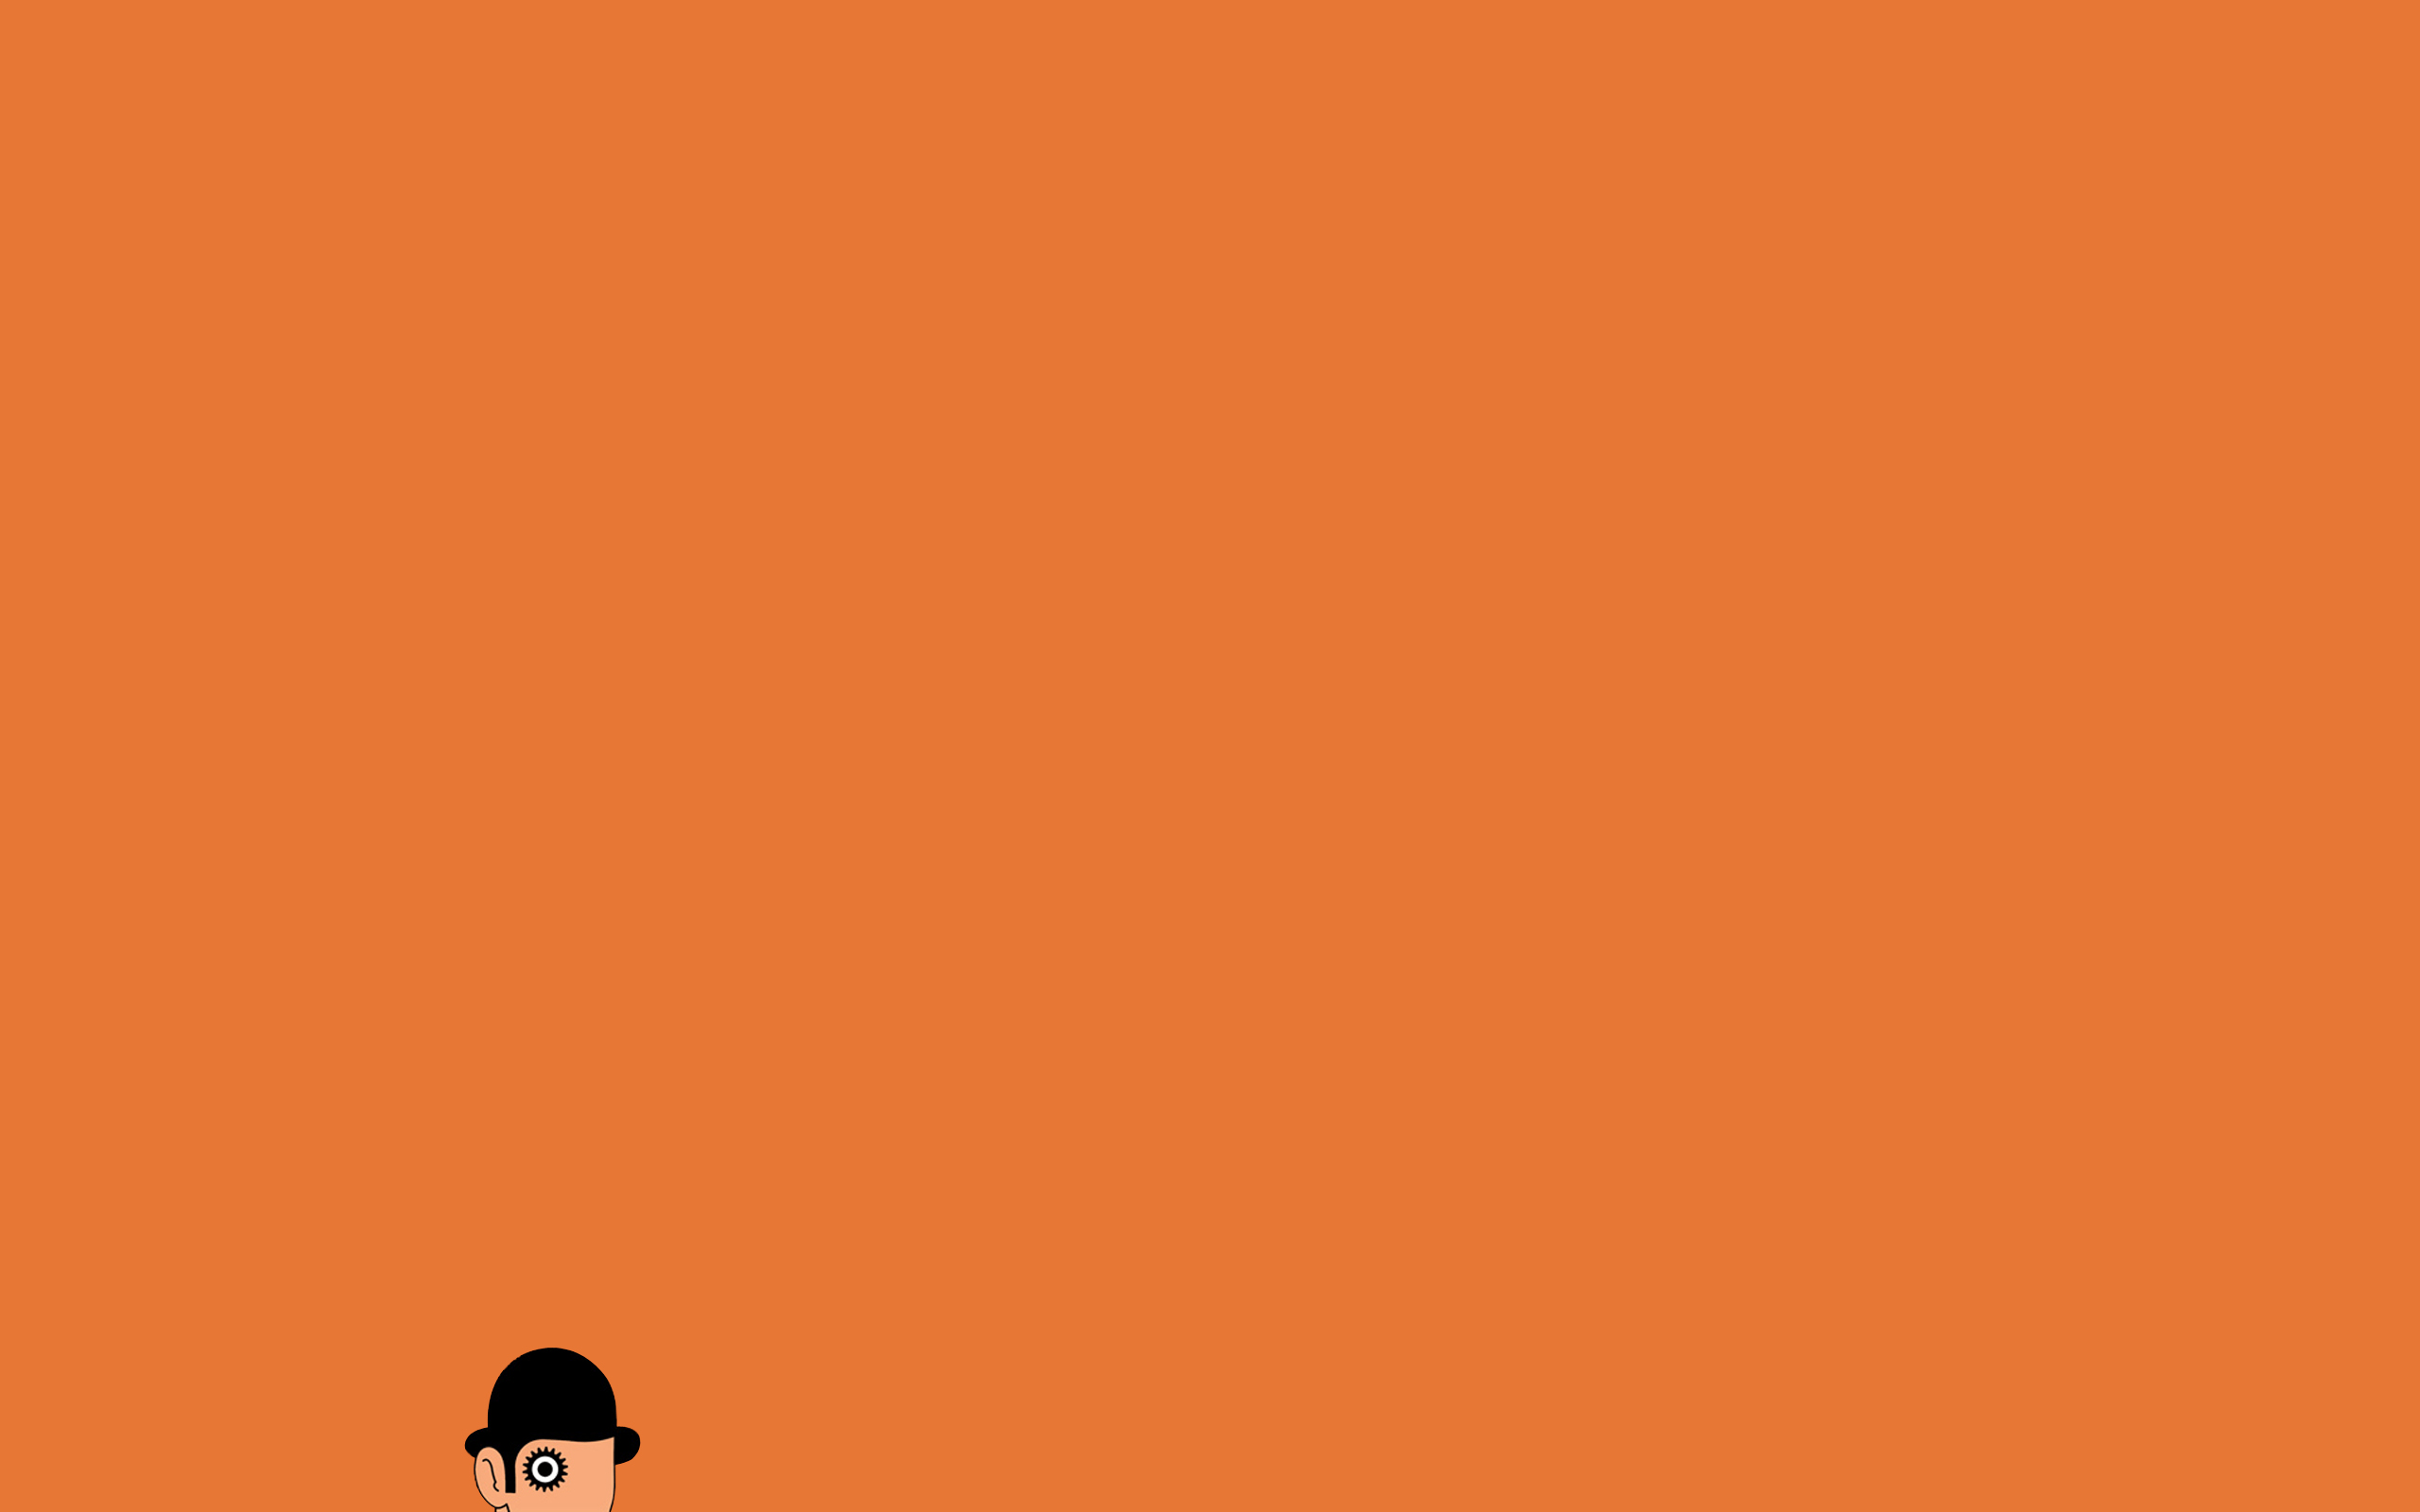 A Clockwork Orange image A Clockwork Orange HD wallpaper